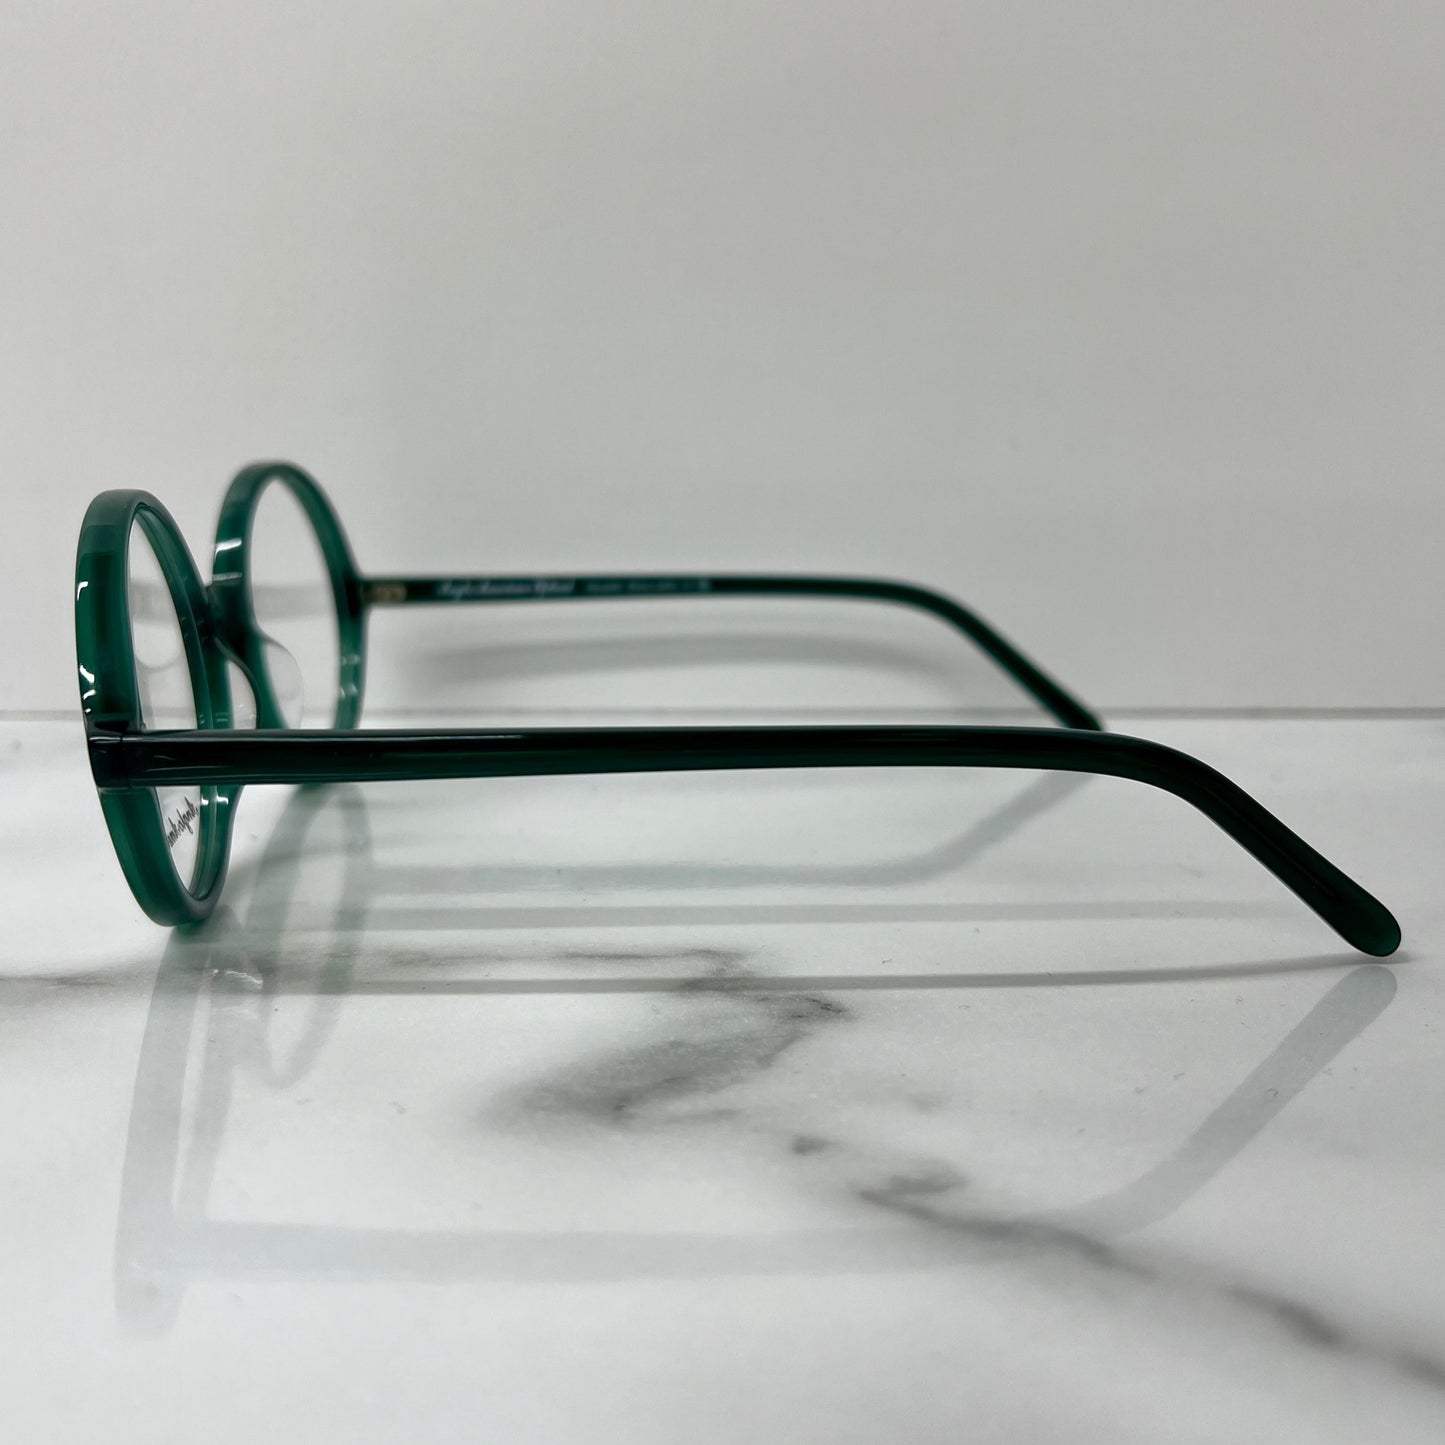 Anglo American 116 Optical Glasses Green Unisex Round Vintage Eyeglasses Frame